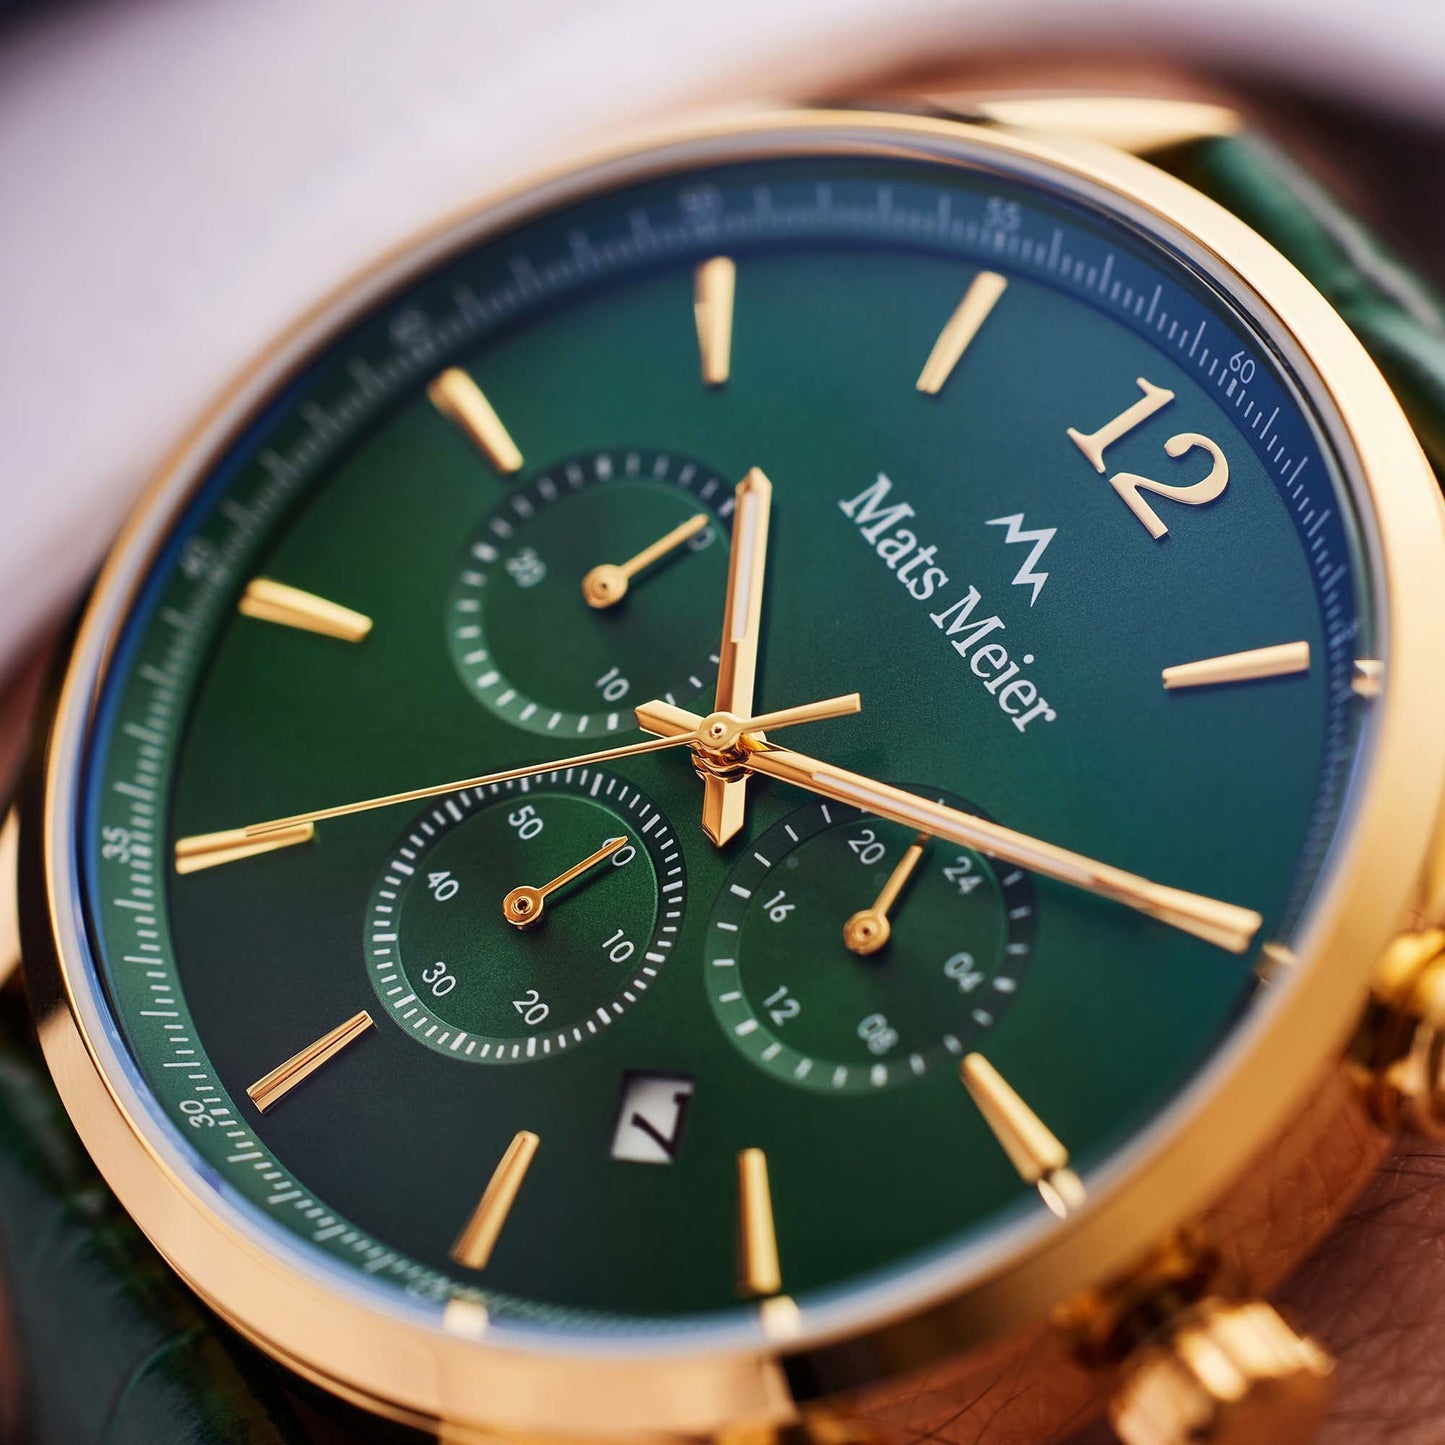 Grand Cornier chronograph mens watch green / gold colored